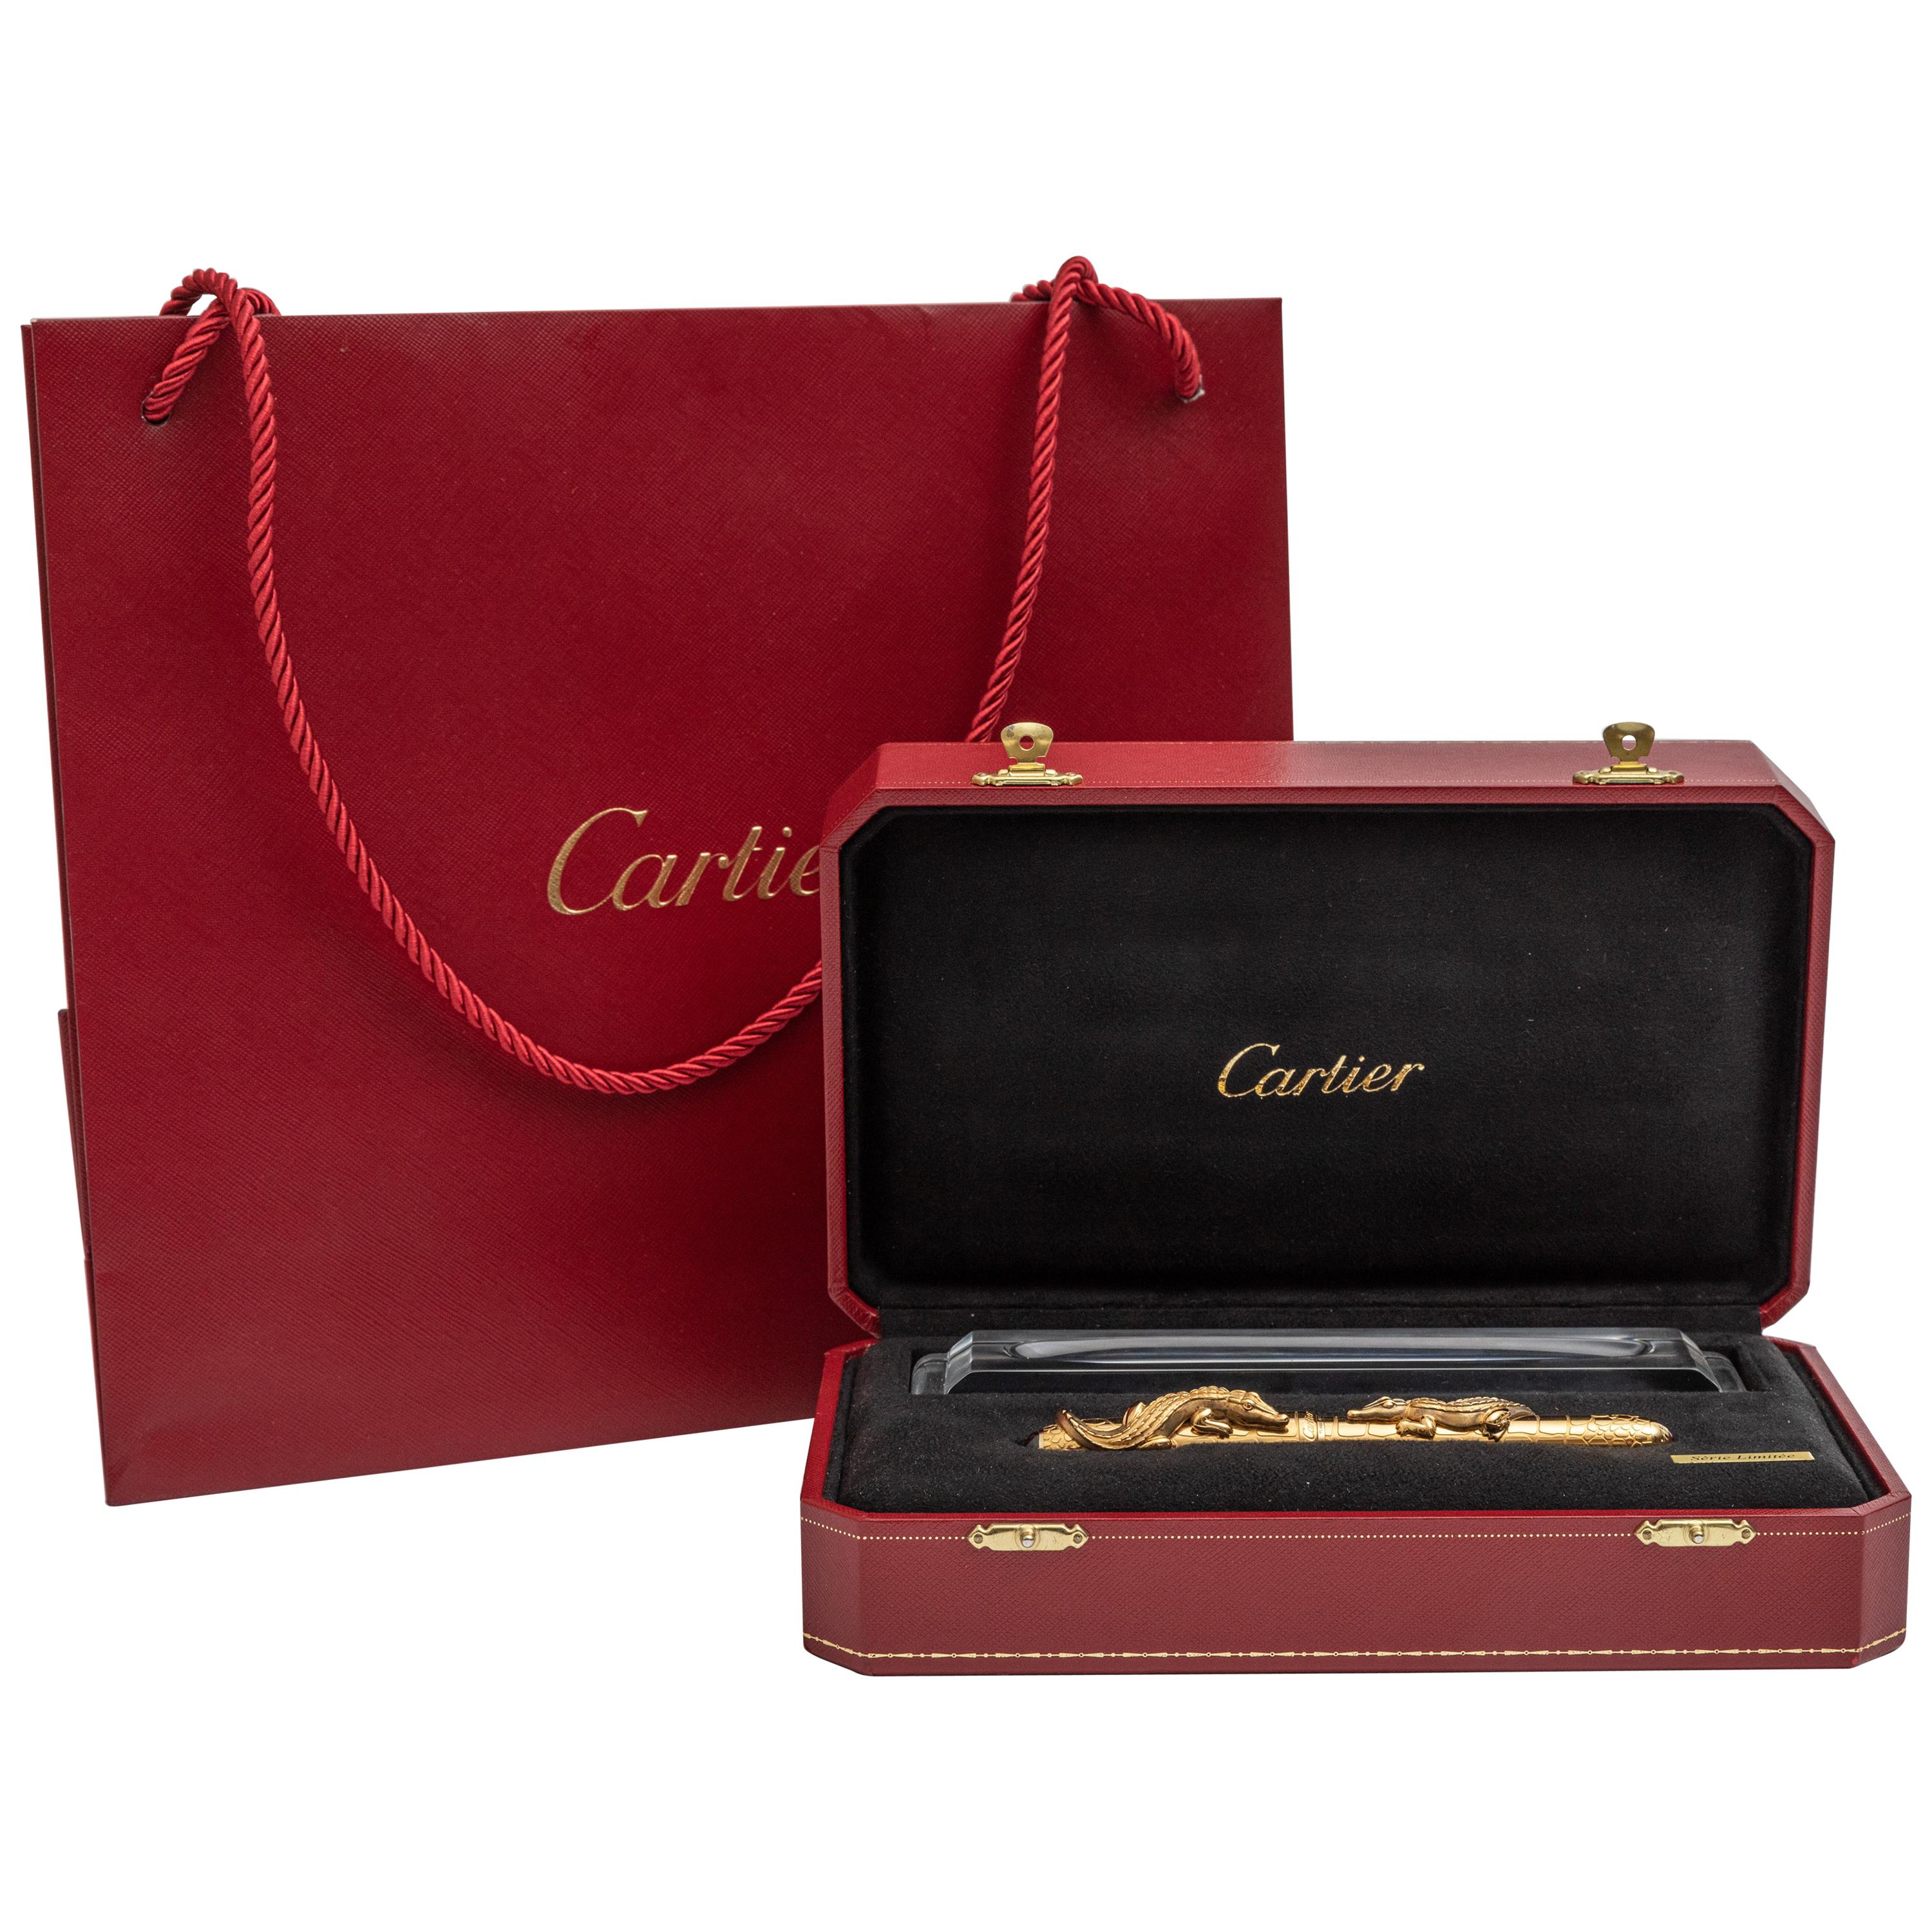 New Cartier Crocodile De Cartier Exceptional Gold Fountain Pen Limited Edition